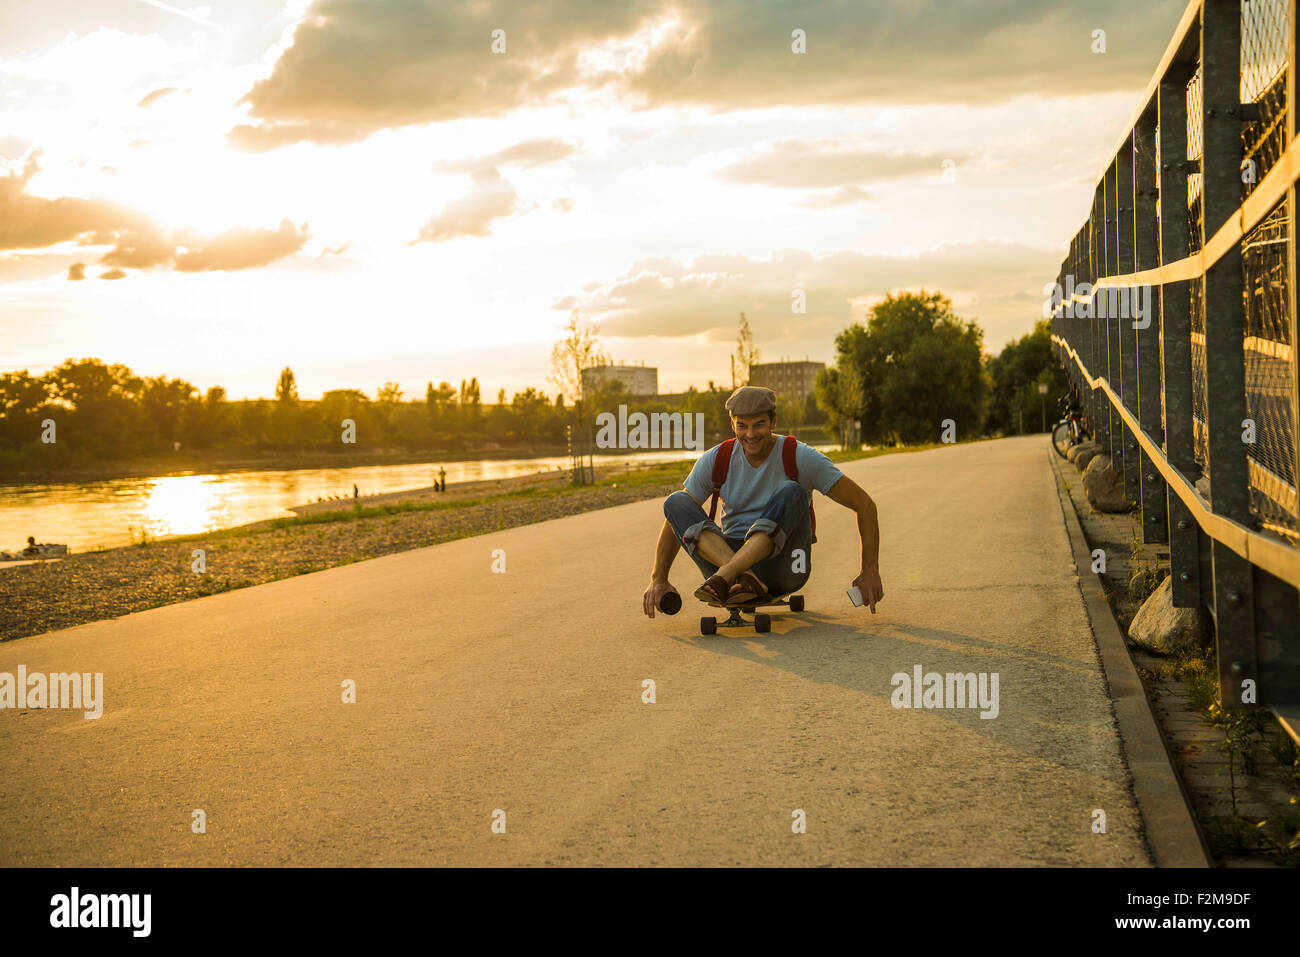 Man sitting on skateboard in the evening twilight Stock Photo